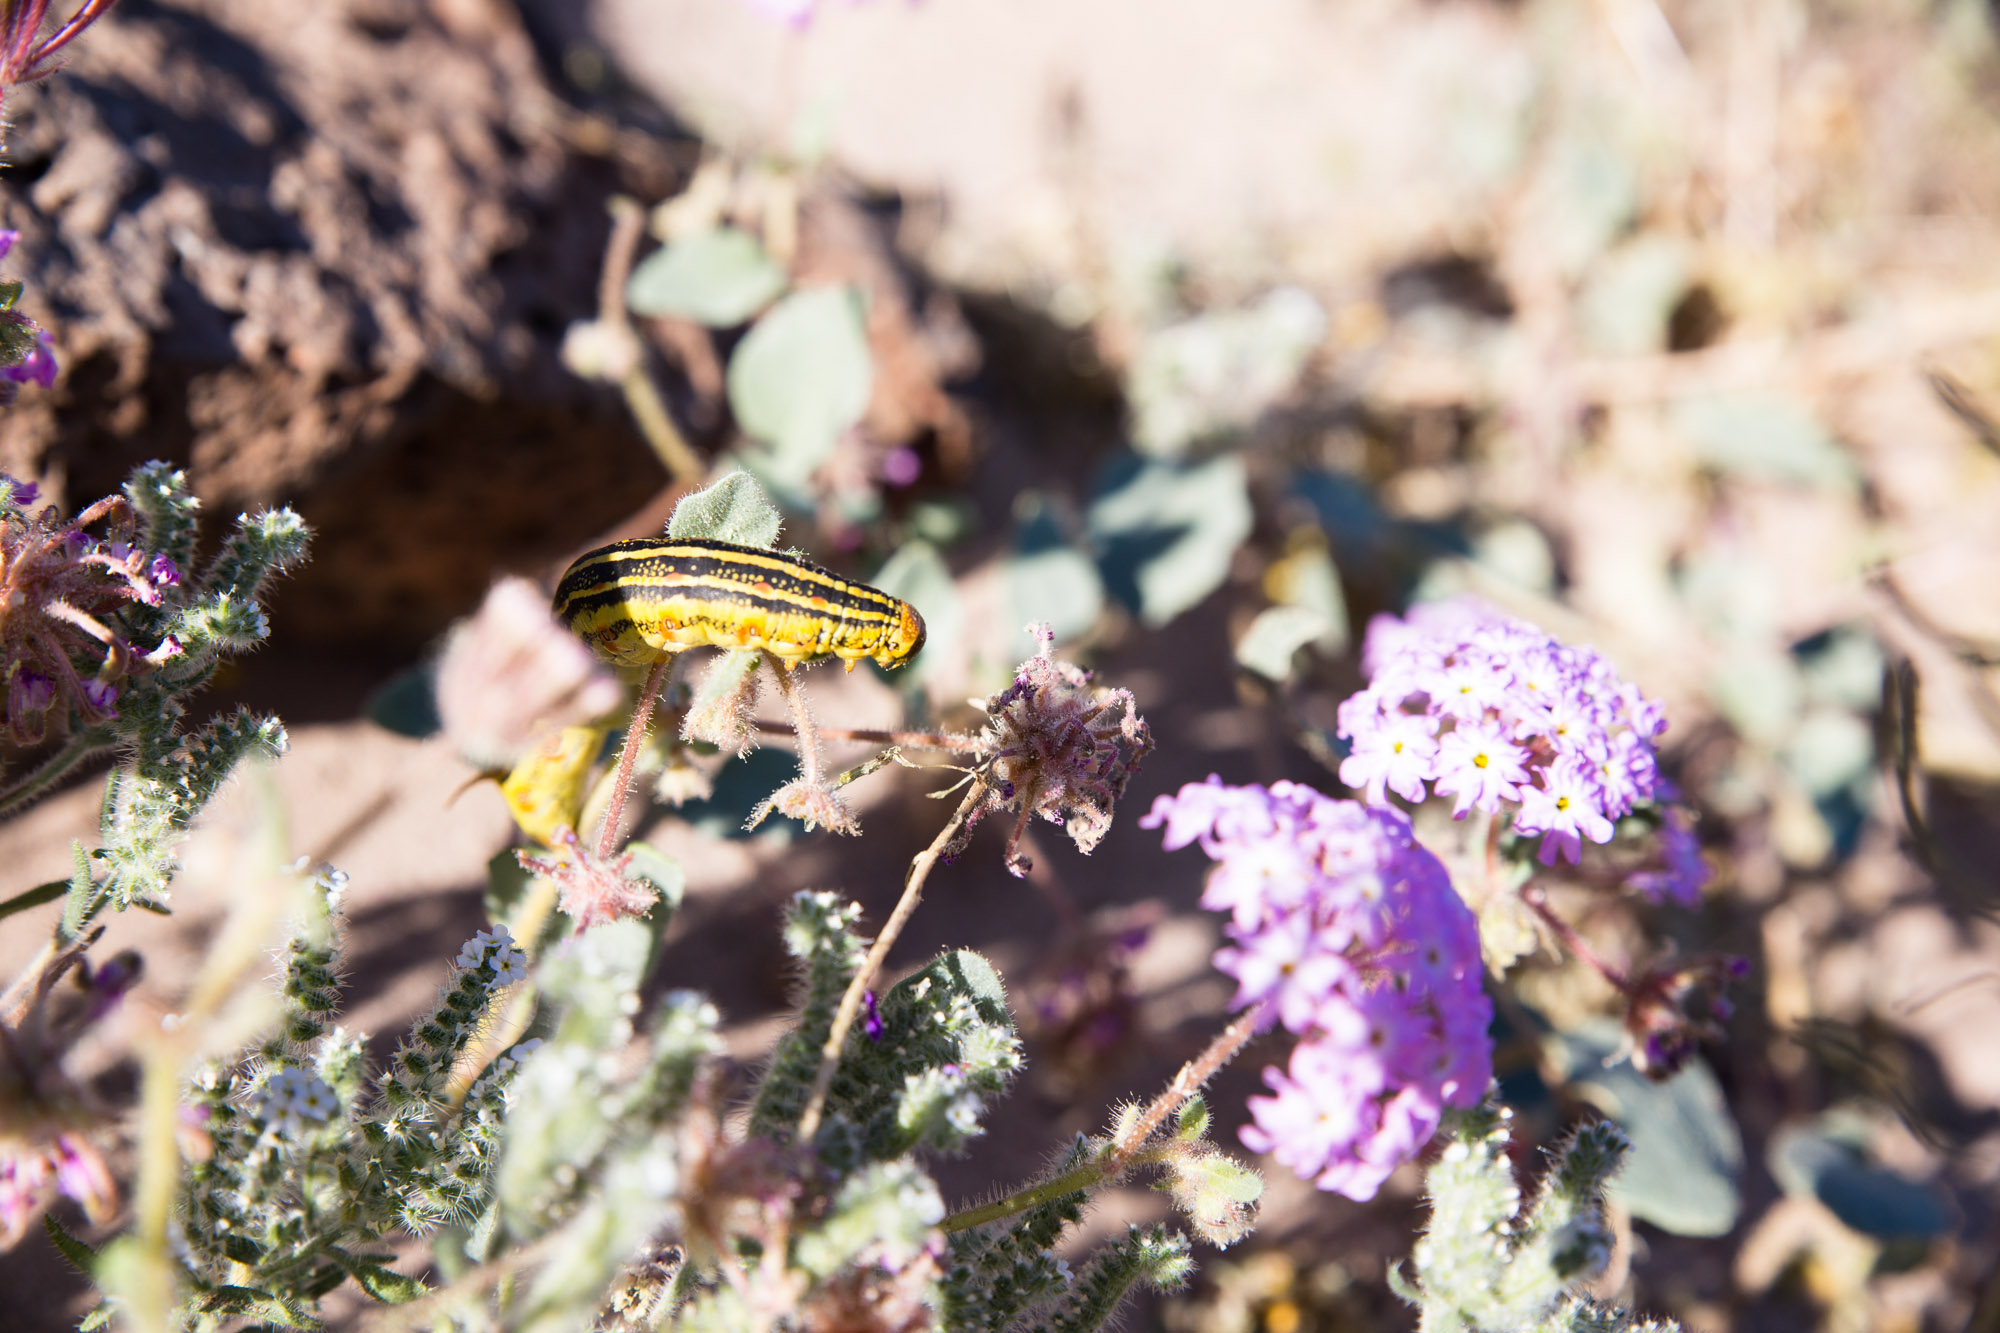 Desert Creatures Thriving on Wildflower 'Superbloom'